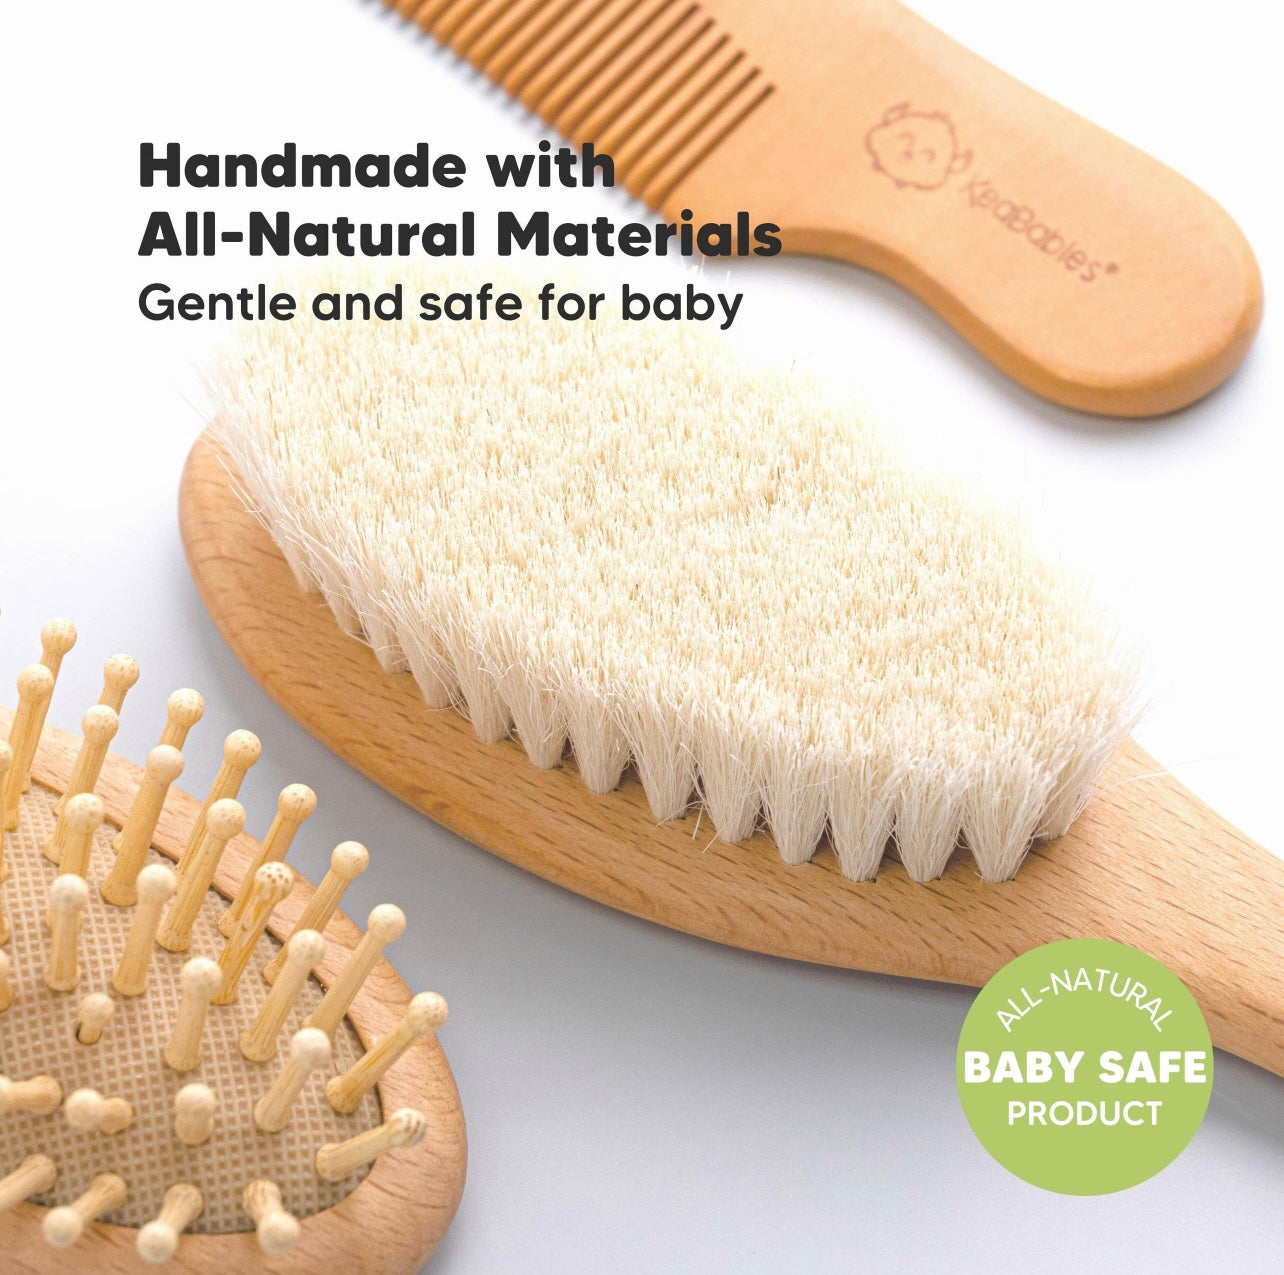 KeaBabies - KeaBabies Baby Hair Brush and Comb Set